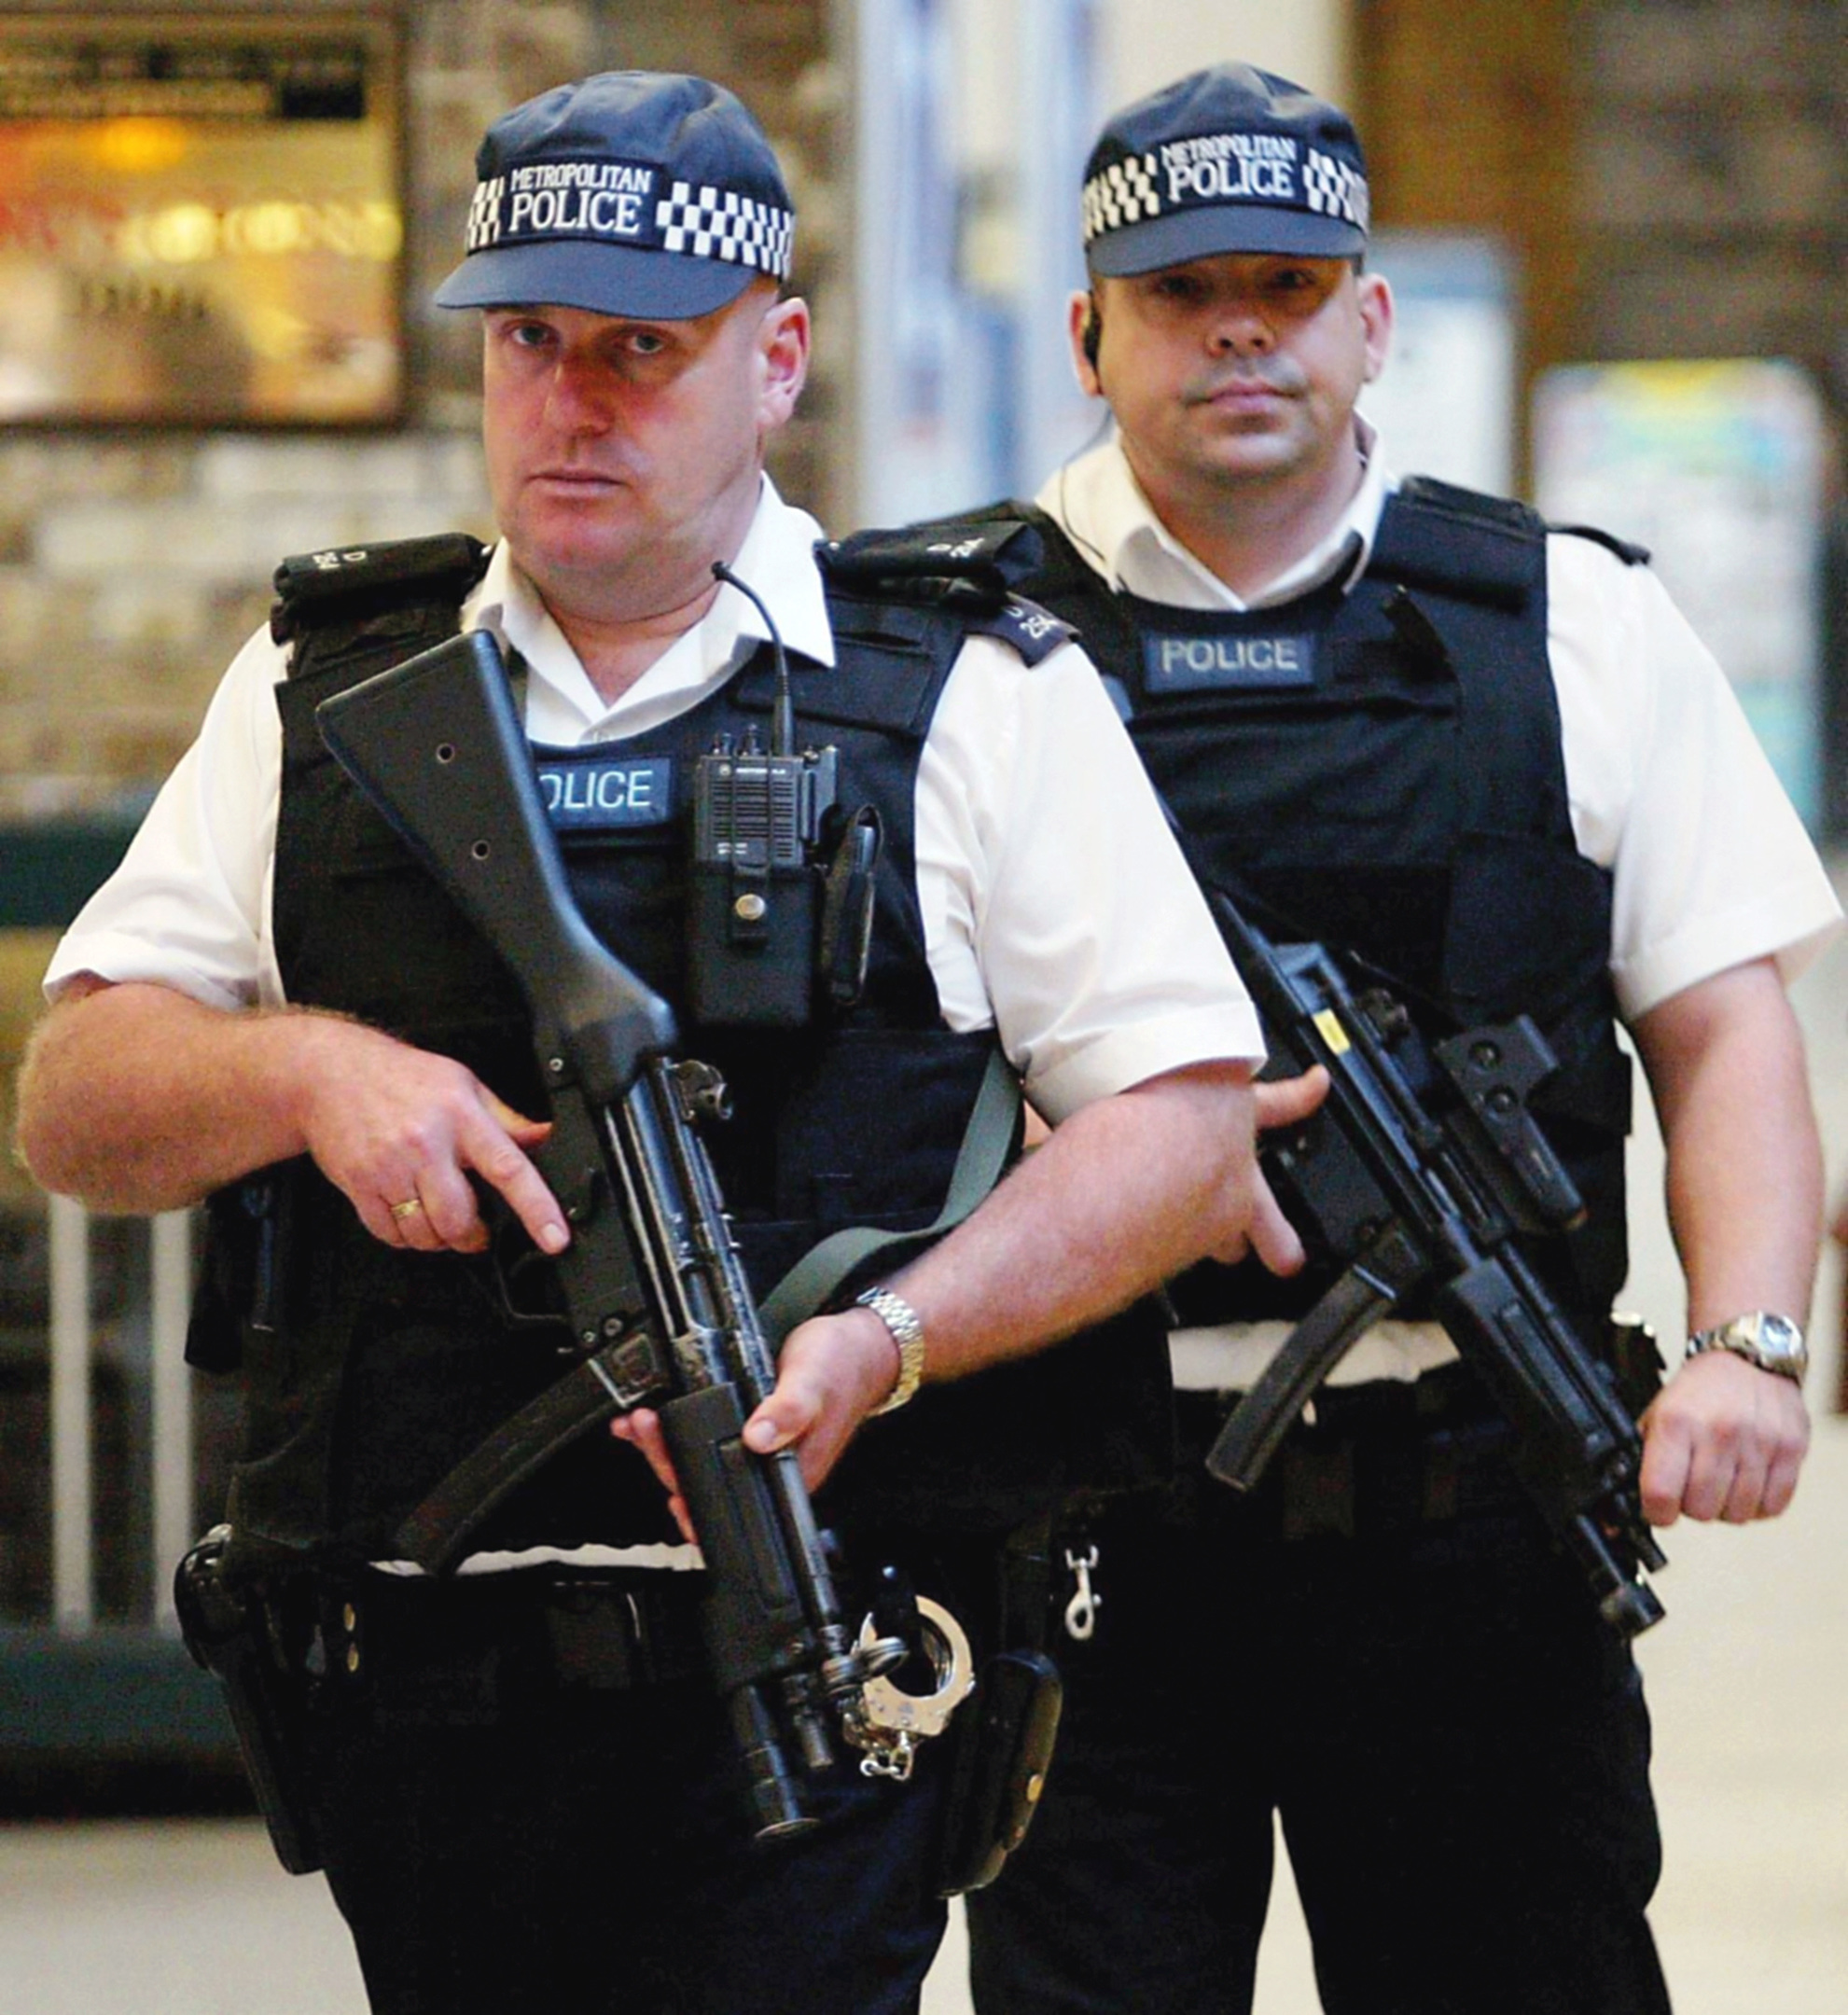 Armed police on patrol at London's Kings Cross Station during London Terrorist Attacks 2005